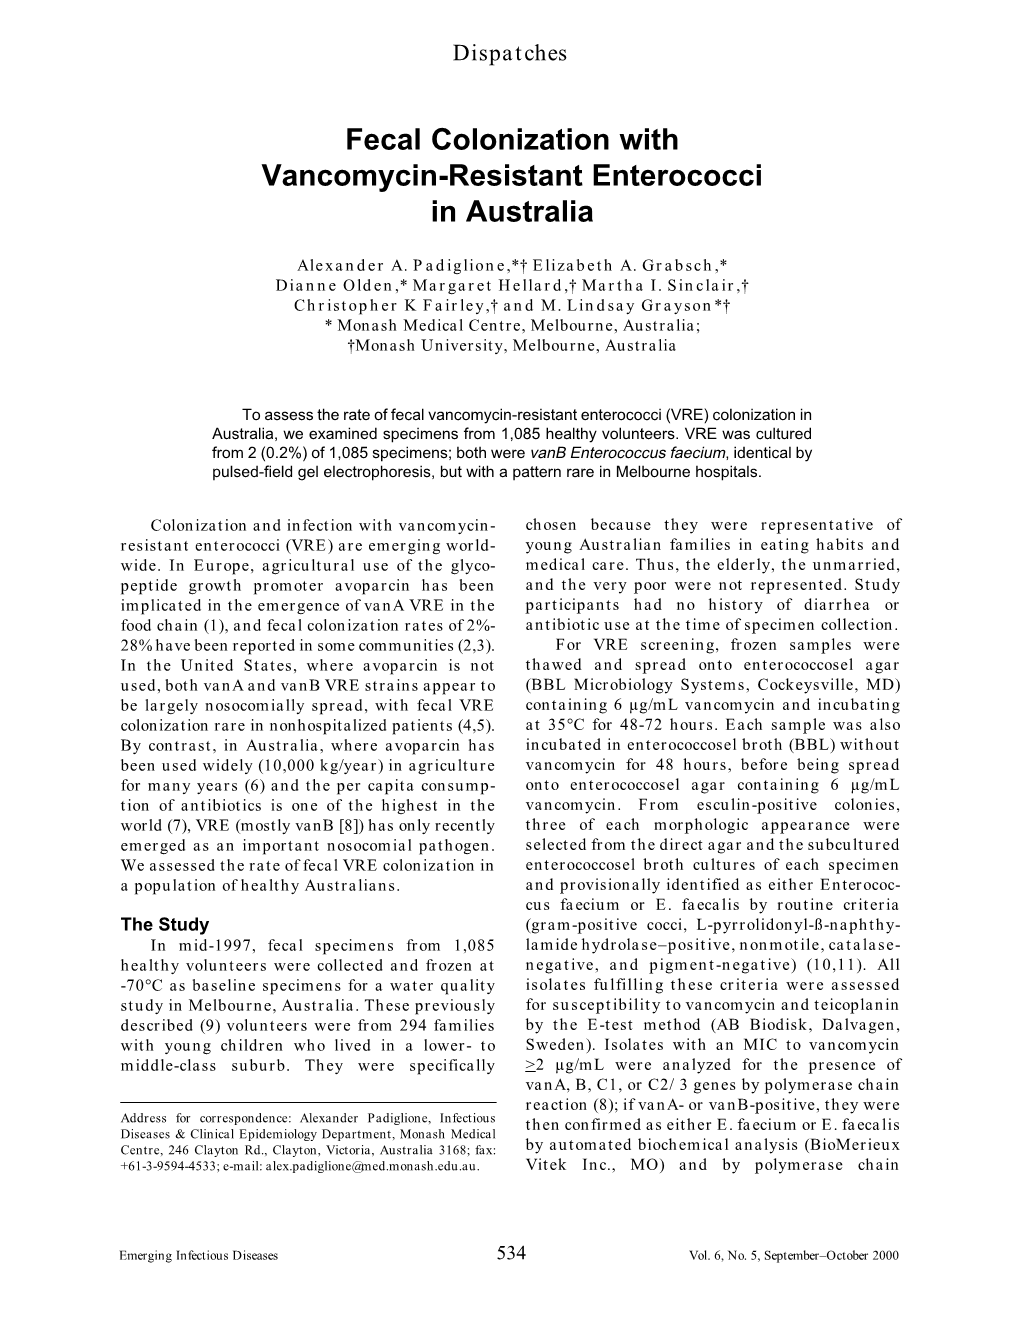 Fecal Colonization with Vancomycin-Resistant Enterococci in Australia